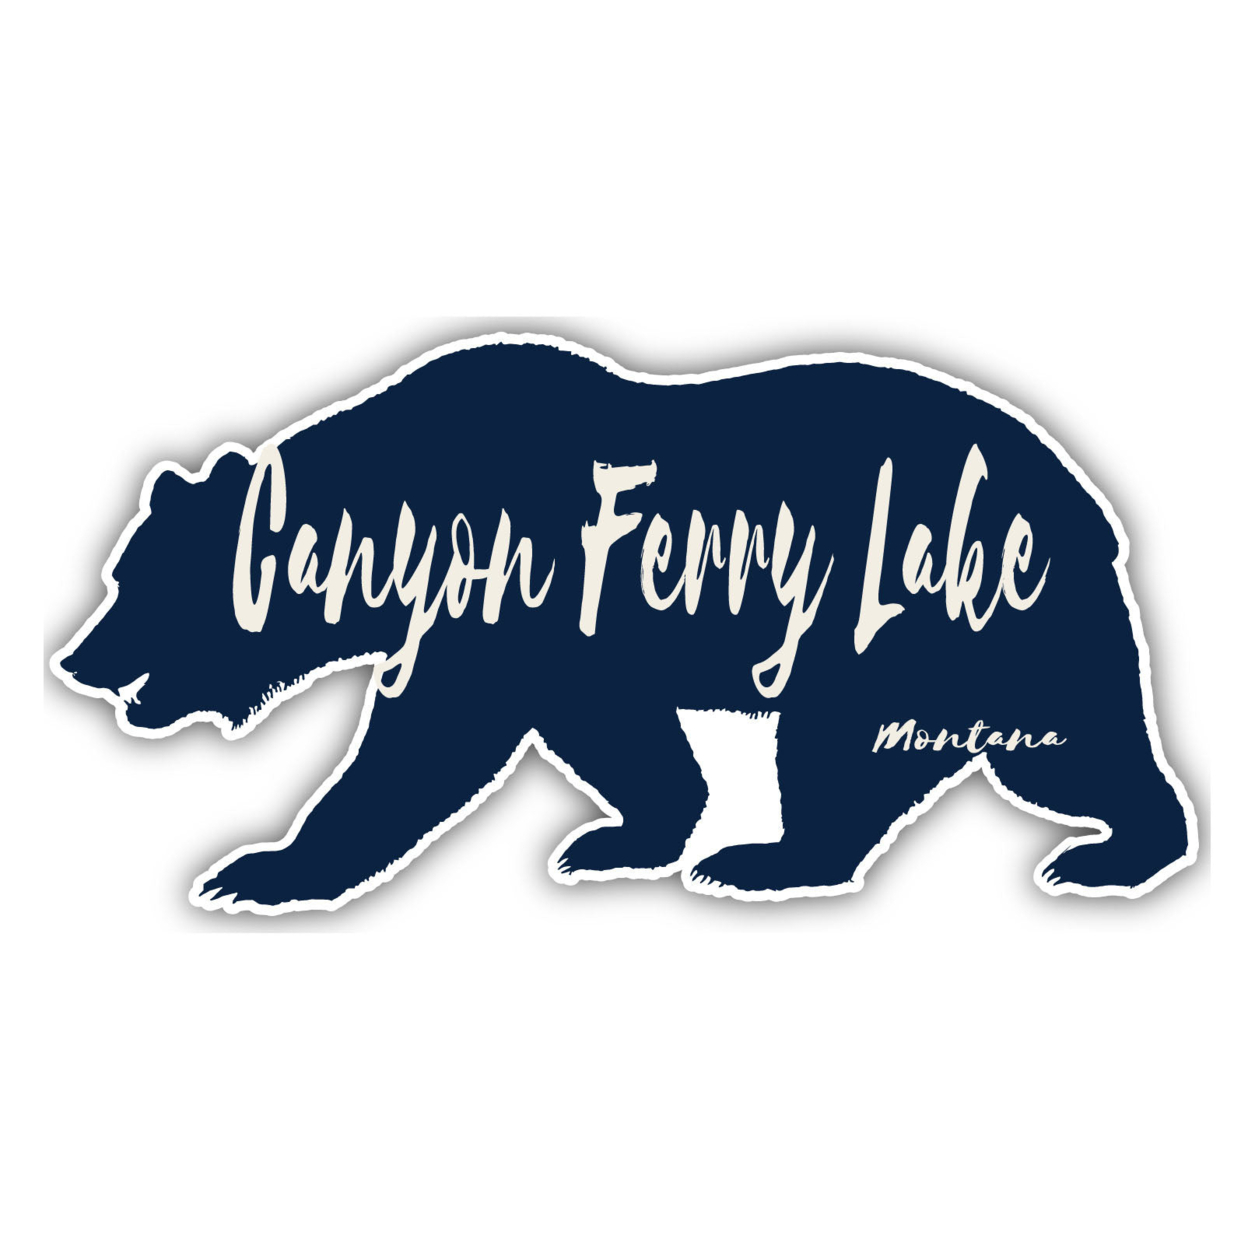 Canyon Ferry Lake Montana Souvenir Decorative Stickers (Choose Theme And Size) - 4-Pack, 6-Inch, Bear